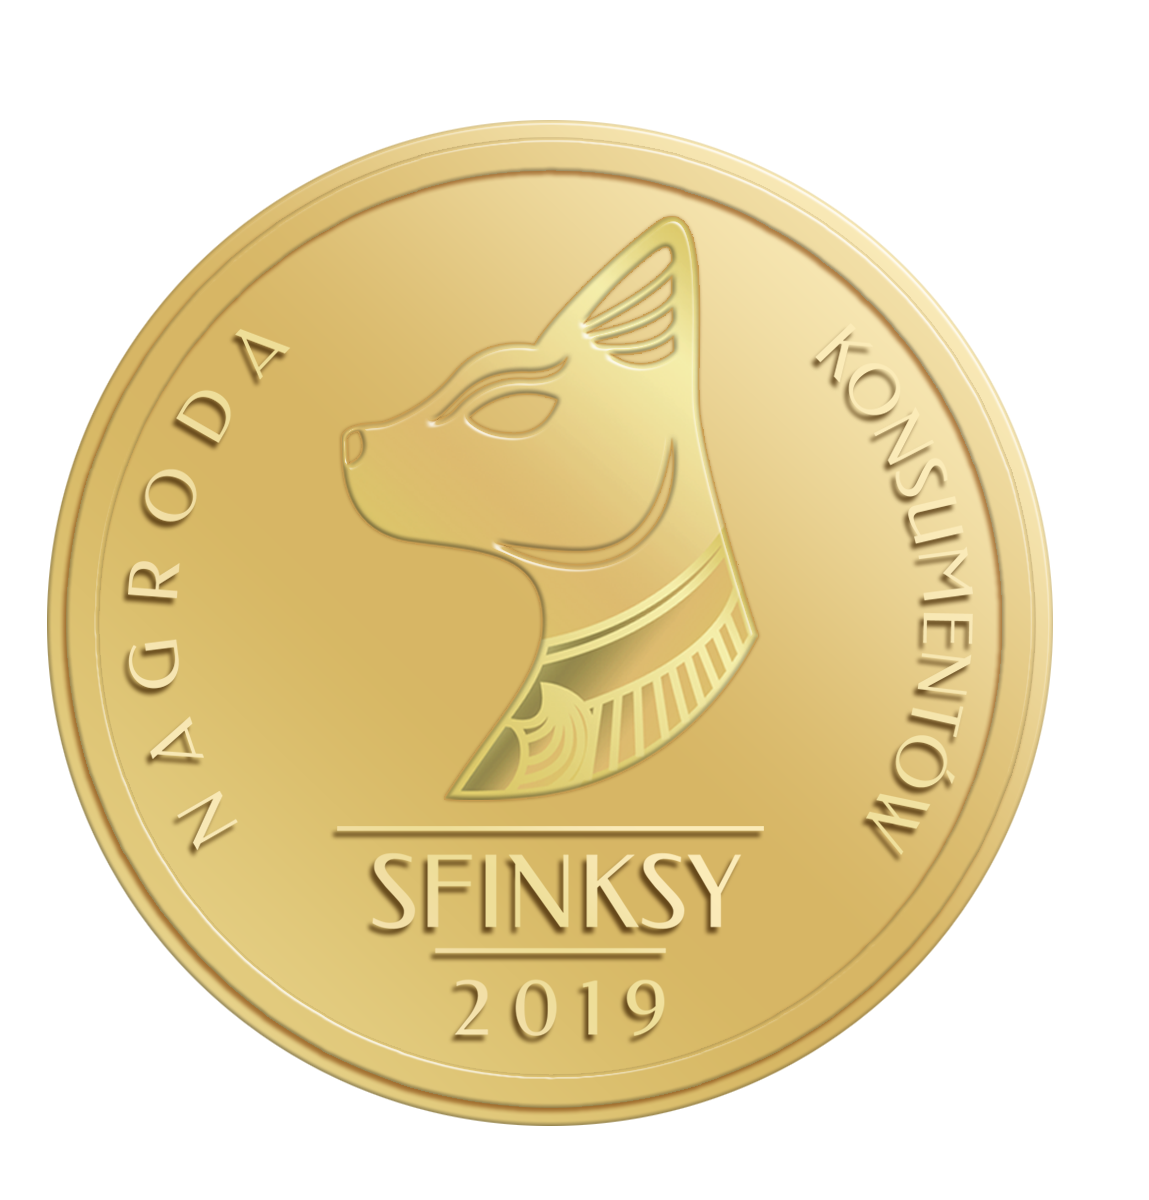 Sfinksy-2019-zloto-nagroda-konsumentow-2(1).png